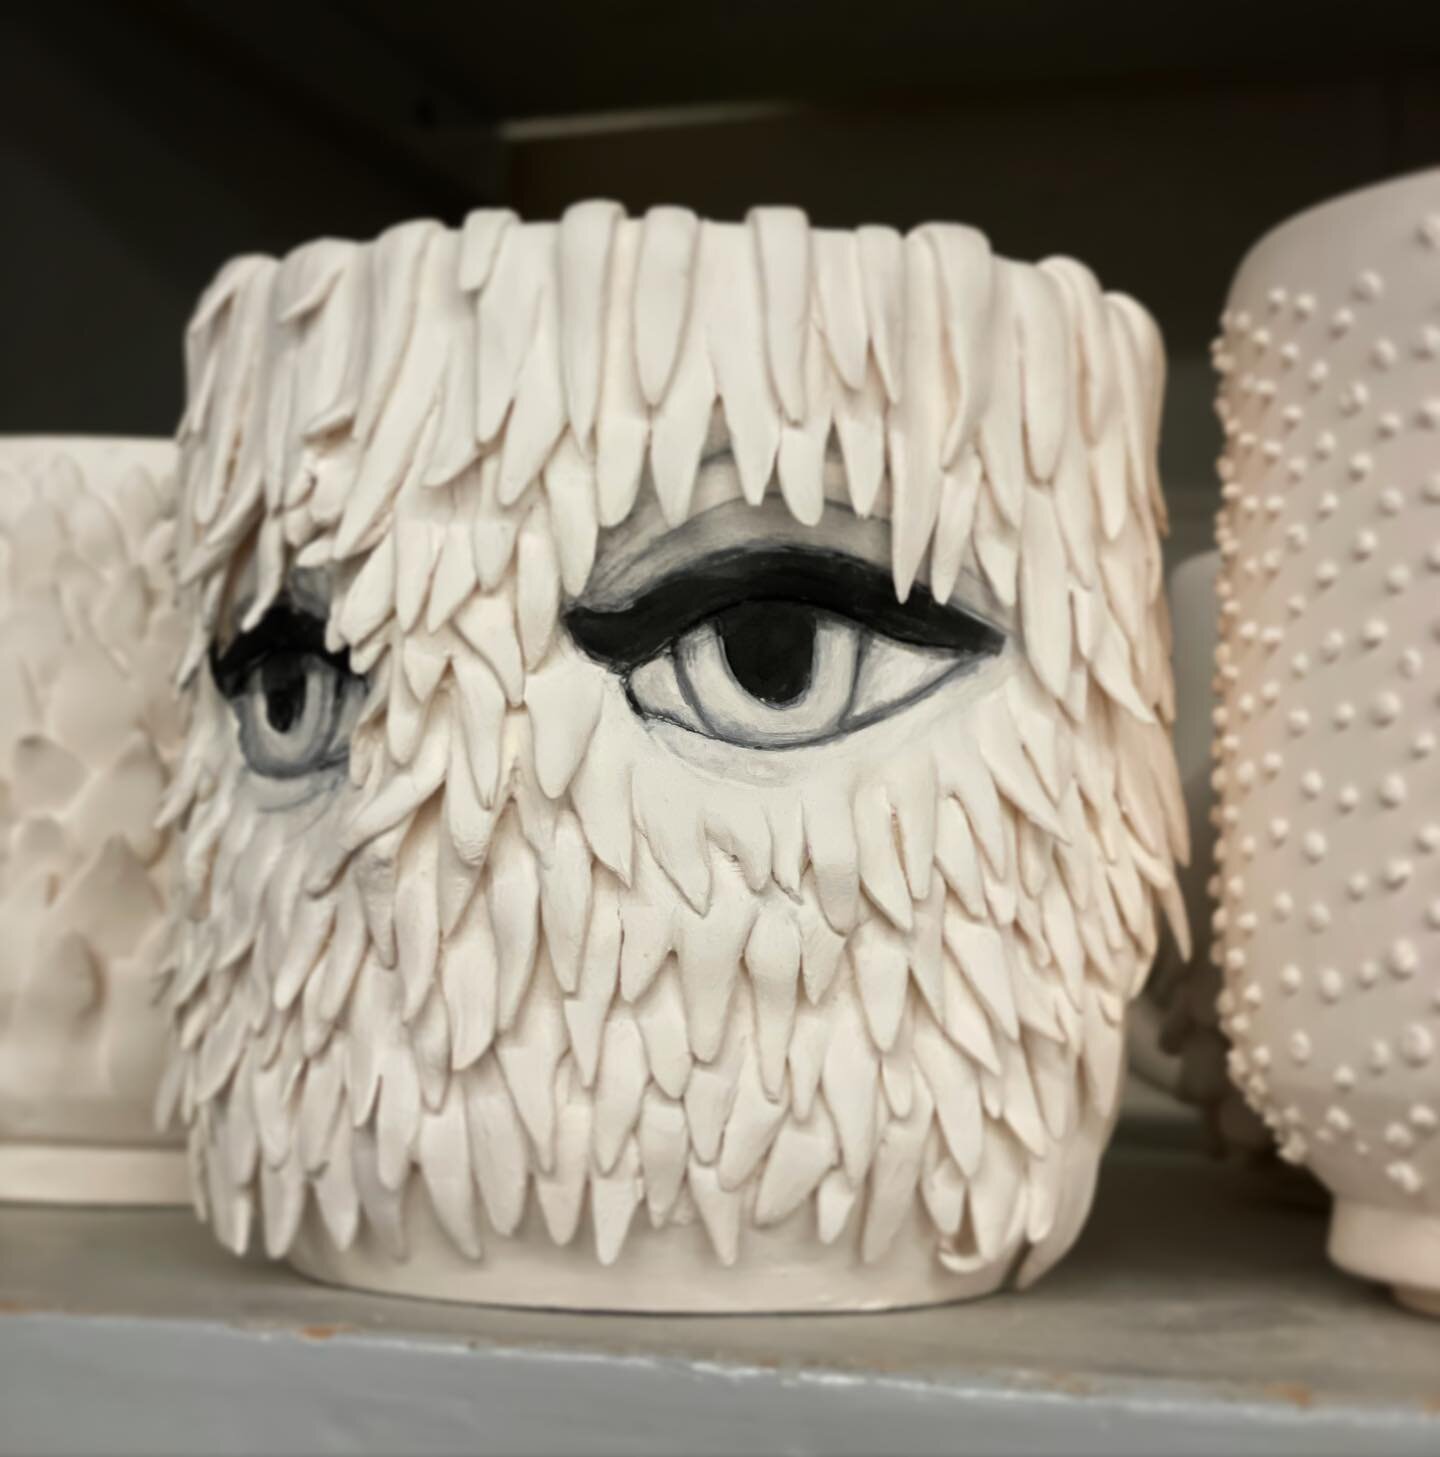 Creature Cup #porcelain #handbuiltceramics #pottery #creature #surrealism #sculpture